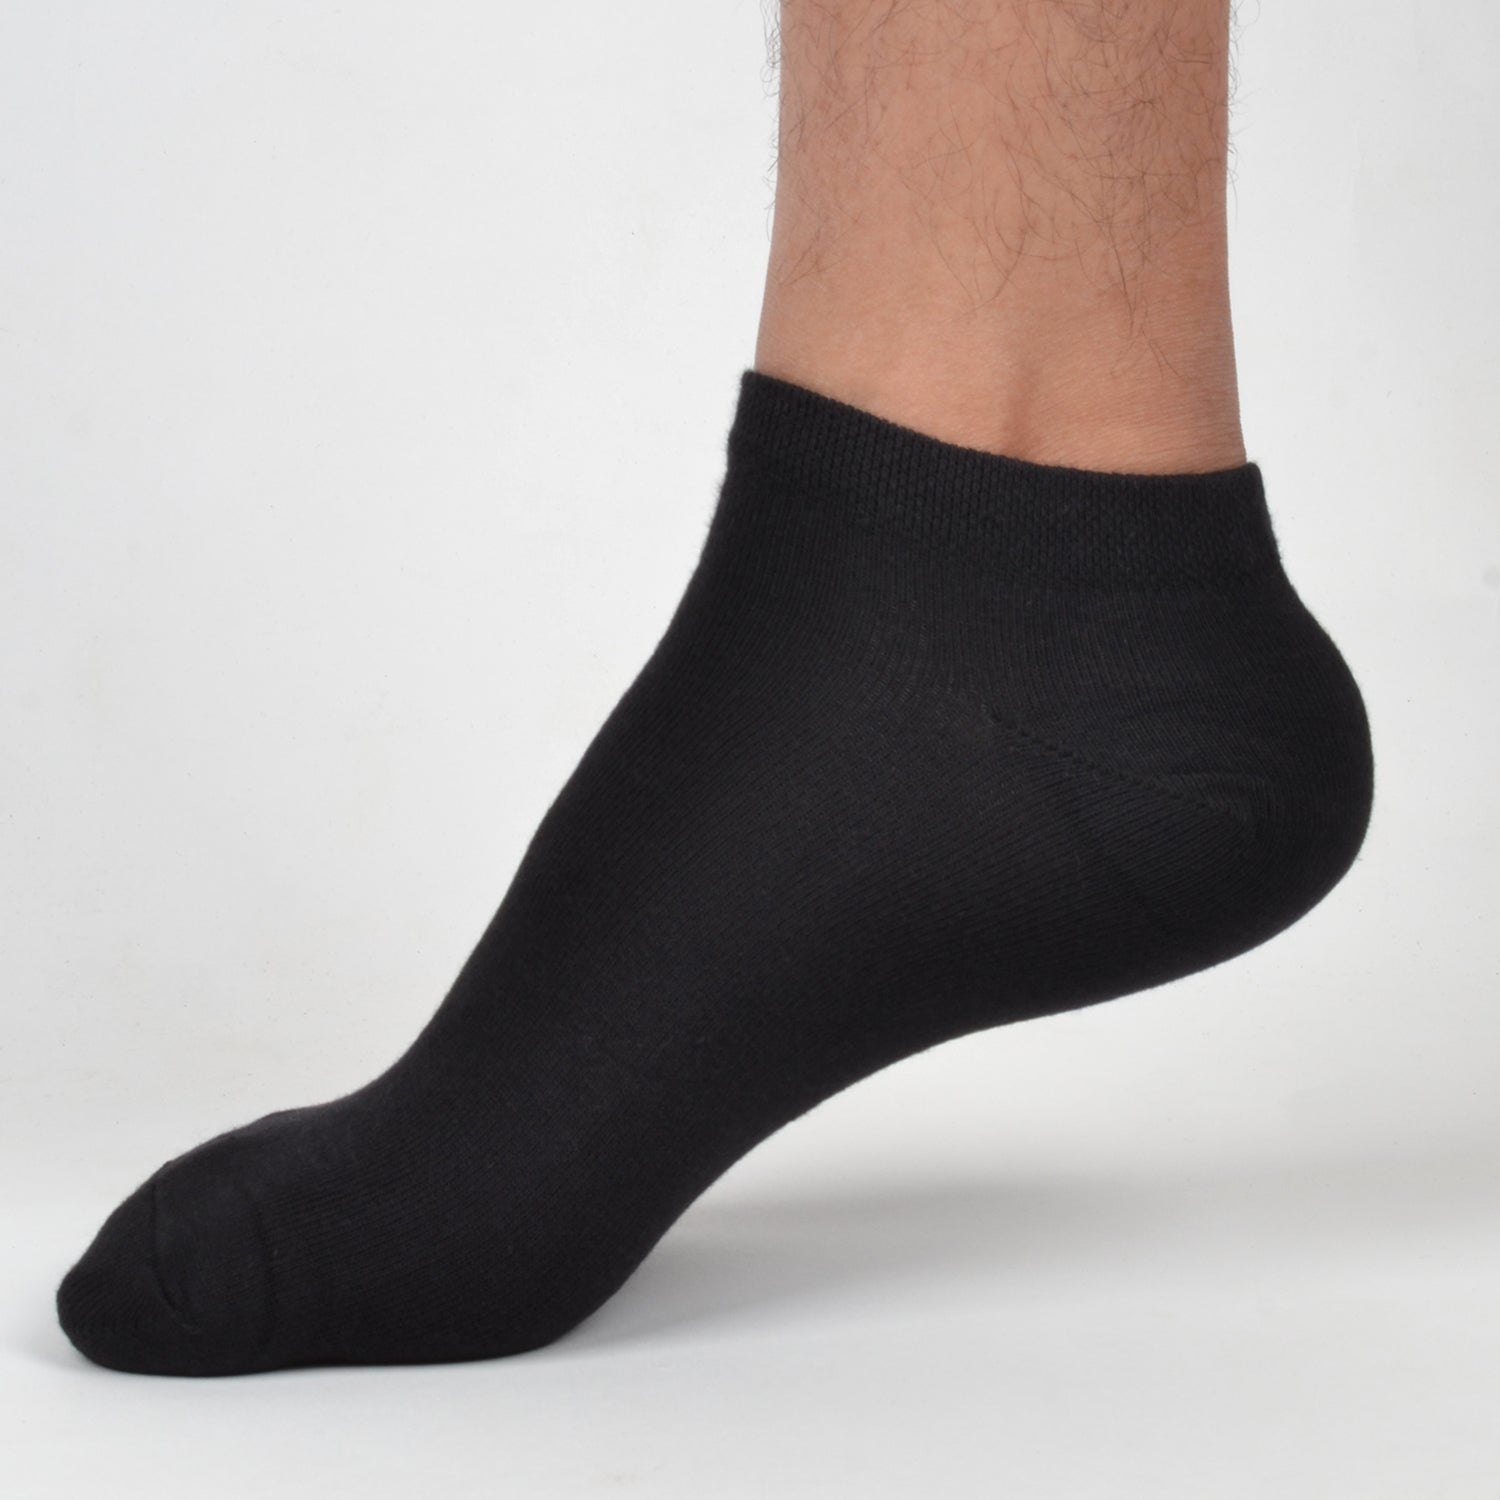 FOOTPRINTS Unisex Solid Cotton Ankle-Length Socks -Pack Of 1 Black